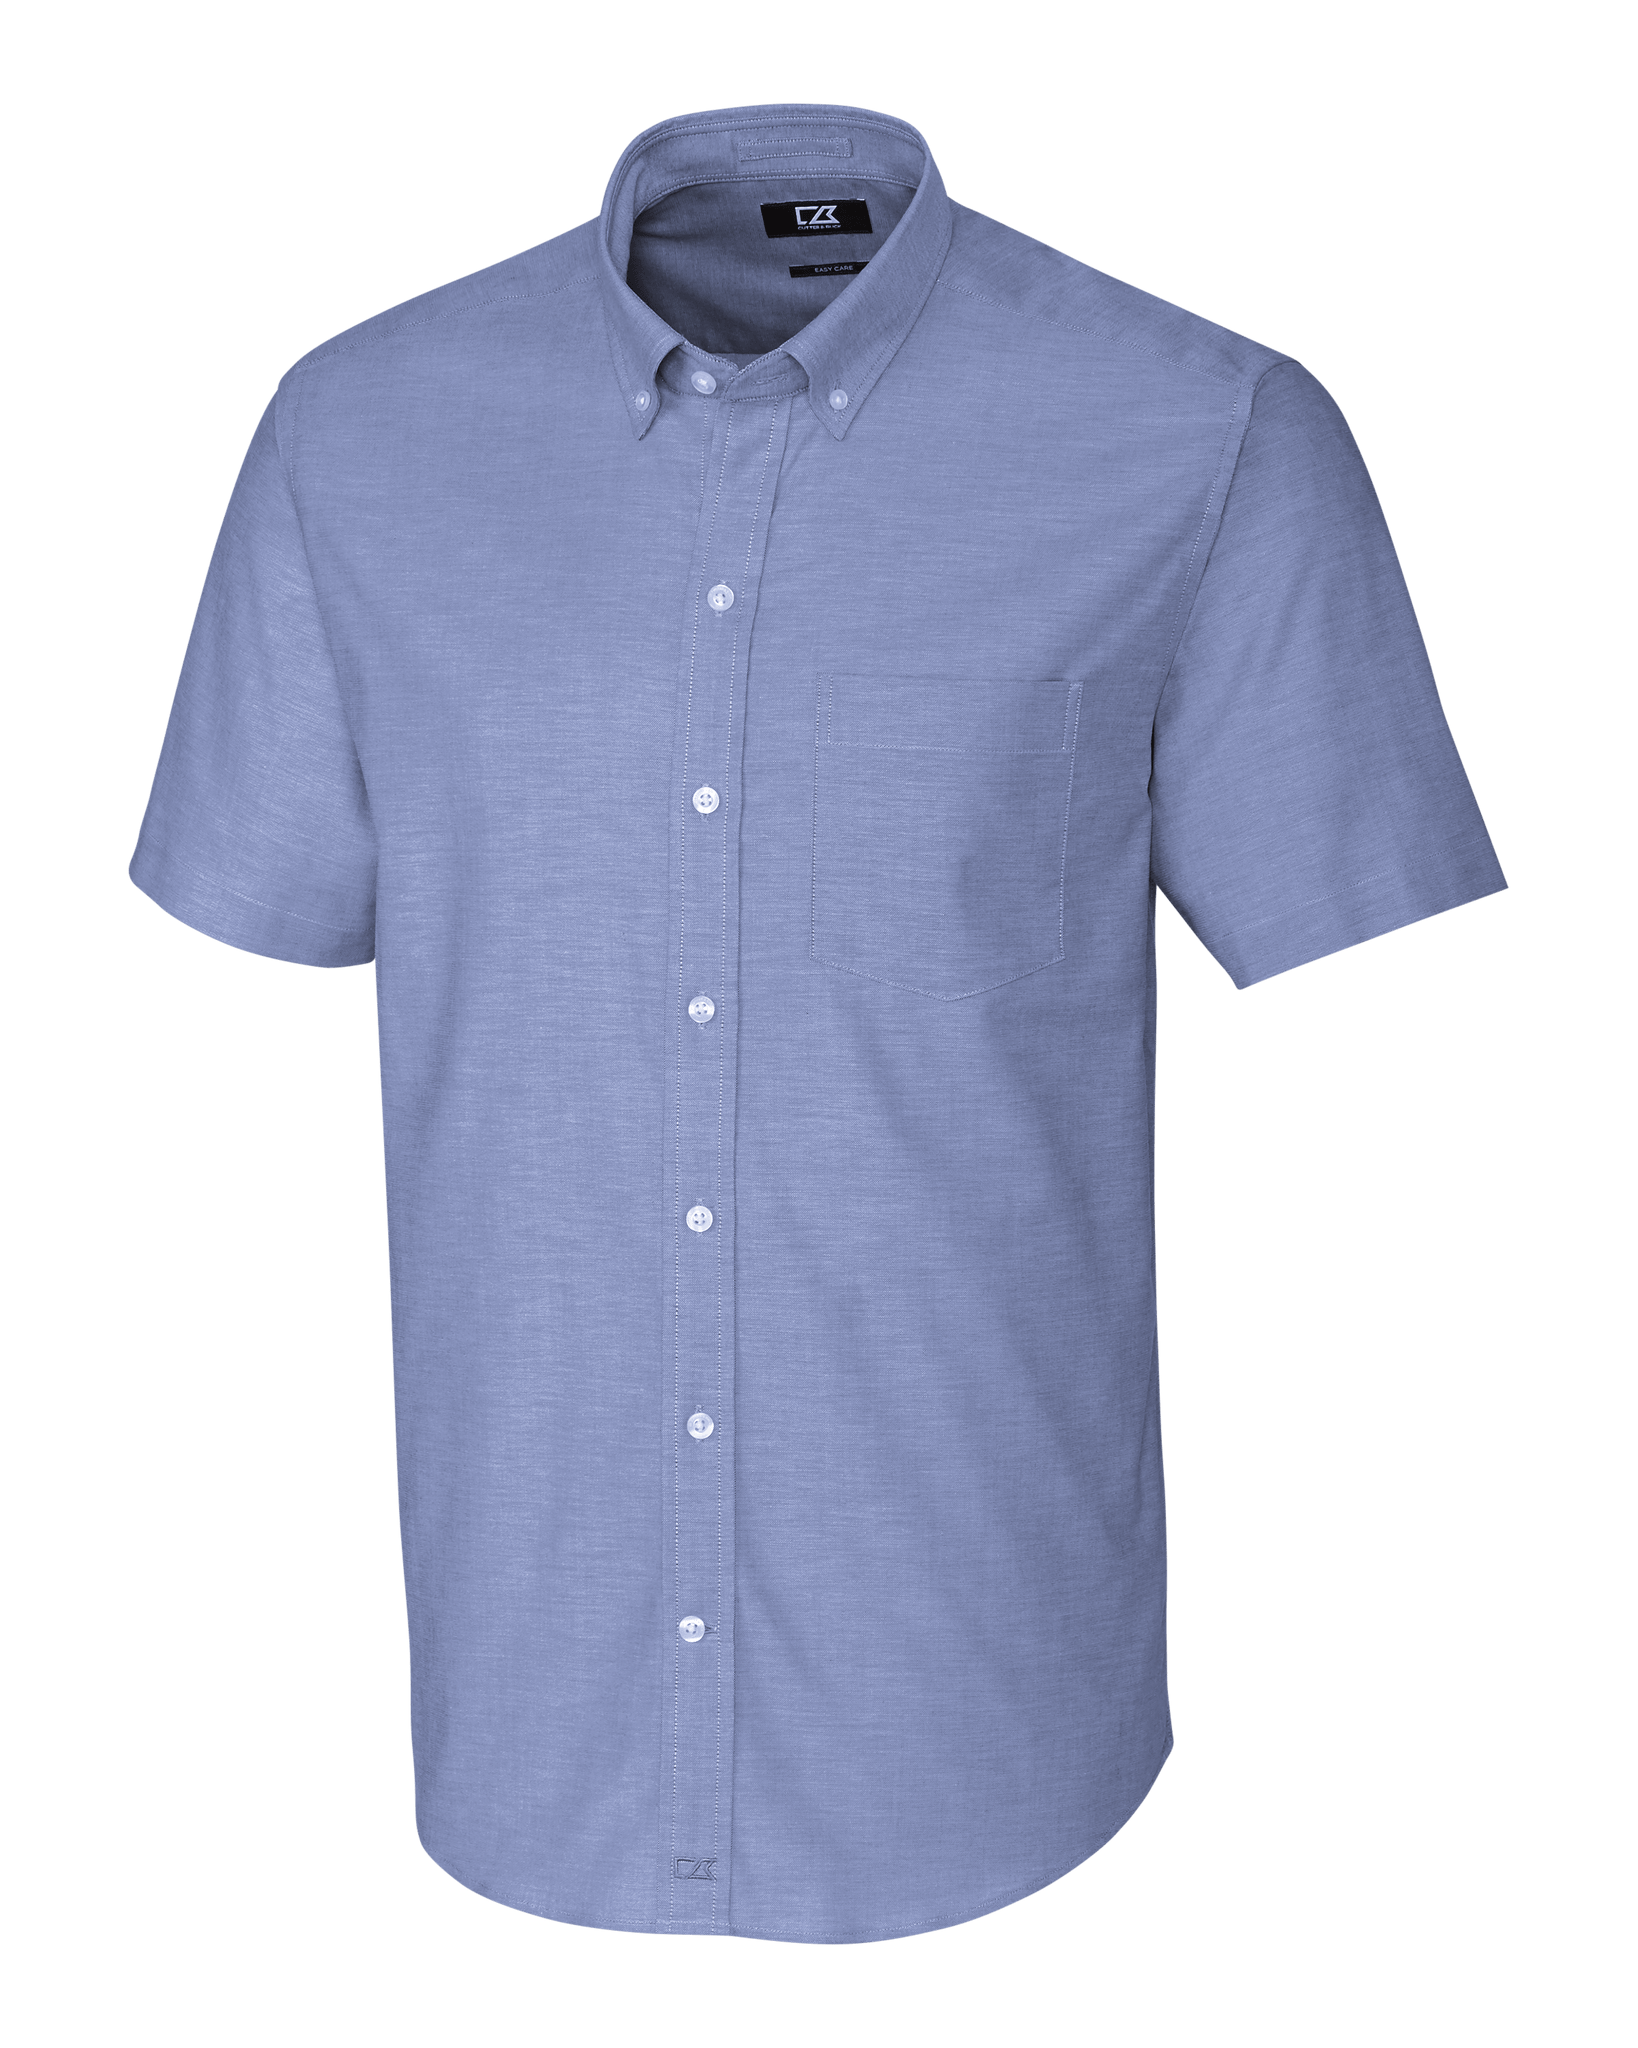 Cutter & Buck Woven Shirts S / French Blue Cutter & Buck - Men's S/S Stretch Oxford Stripe